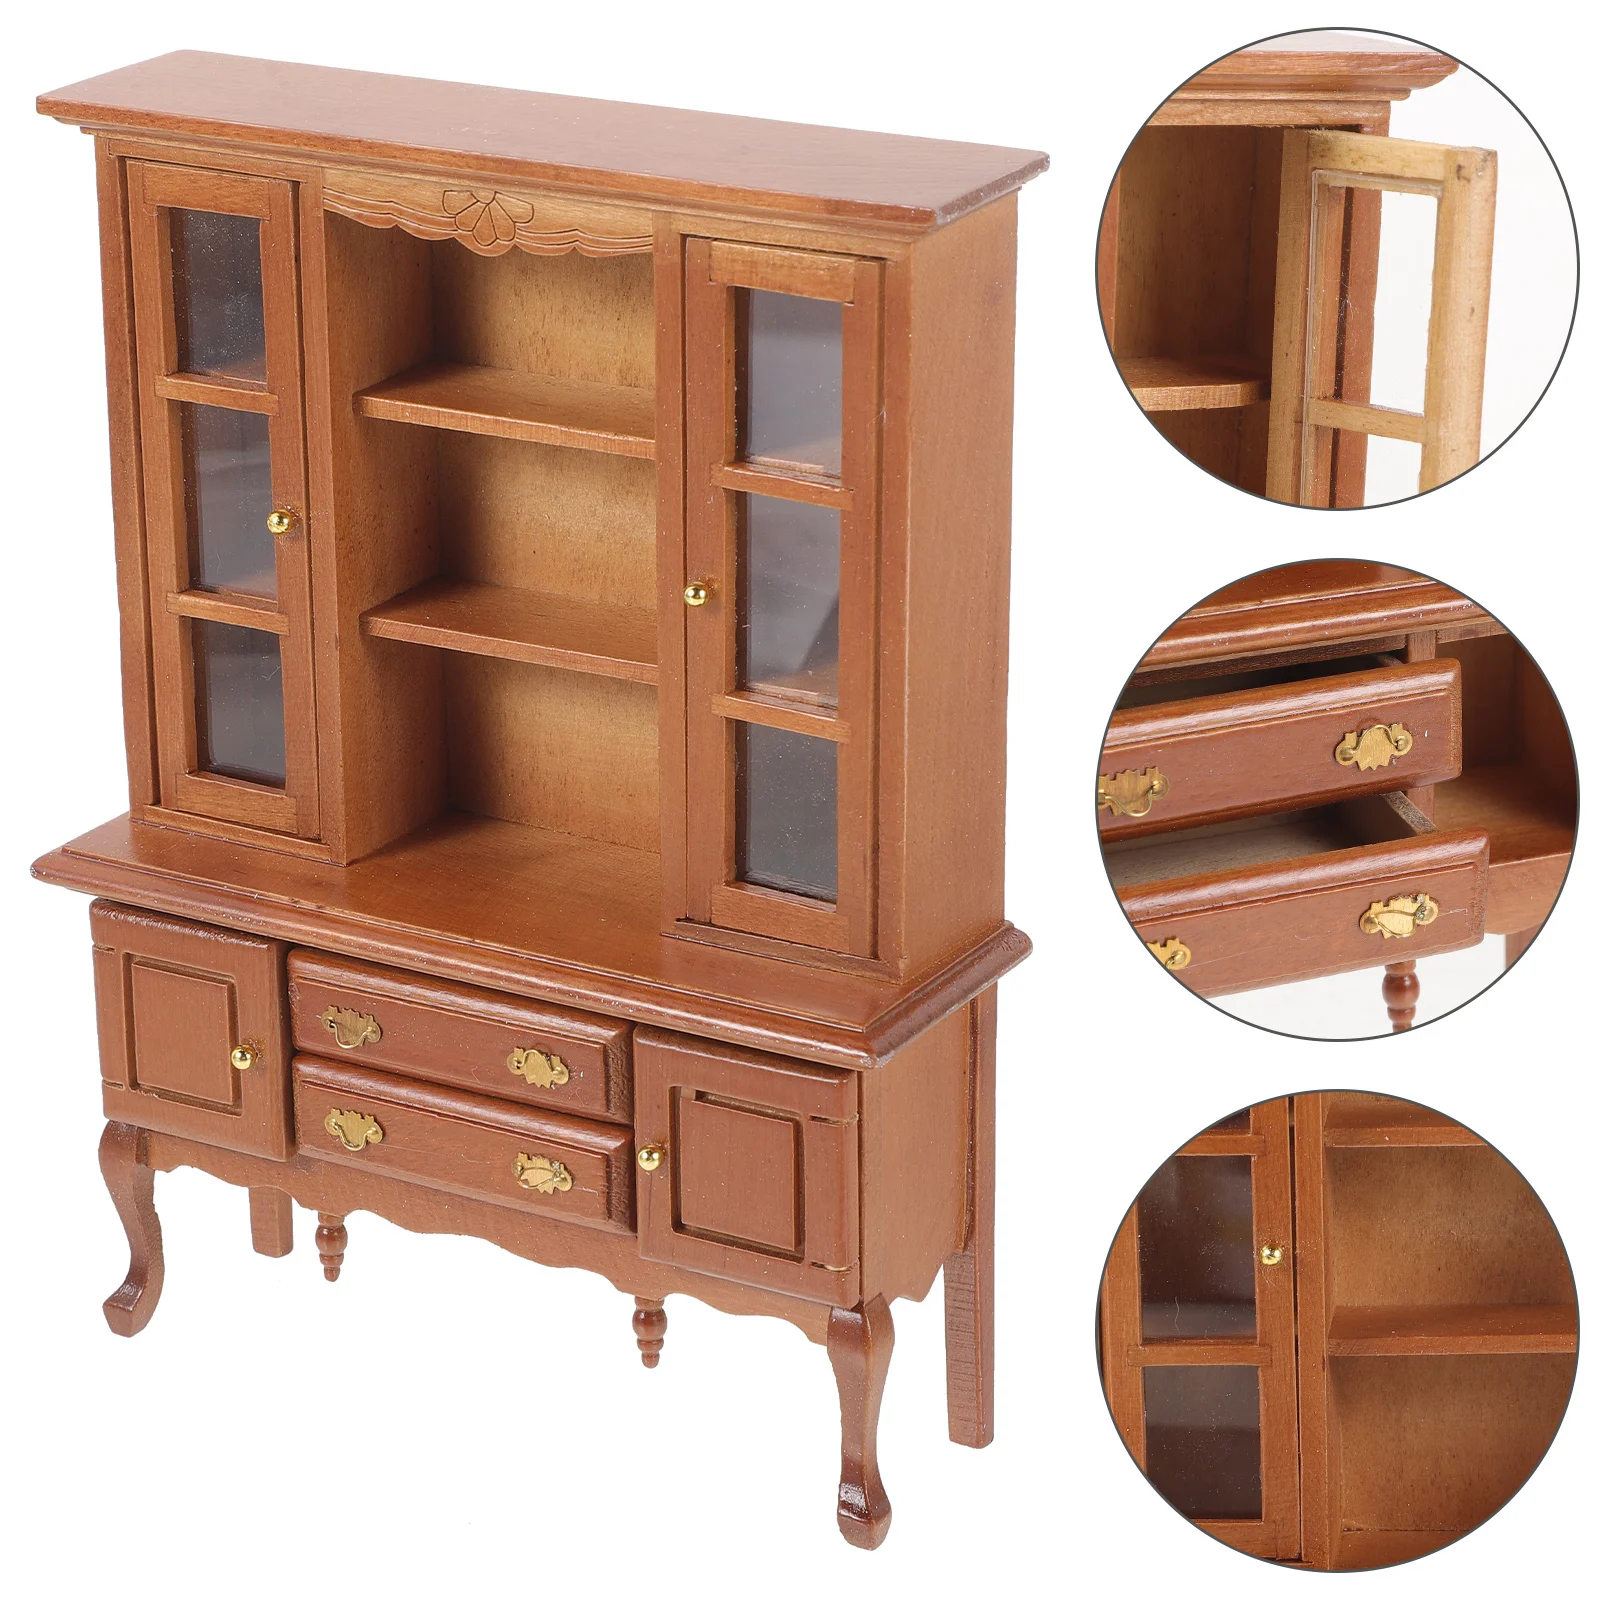 

1:12 Dollhouse Miniature Furniture Model Ornaments Wooden Crafts Scene Cabinet Miniatures Decor Bookshelves Bookshelves